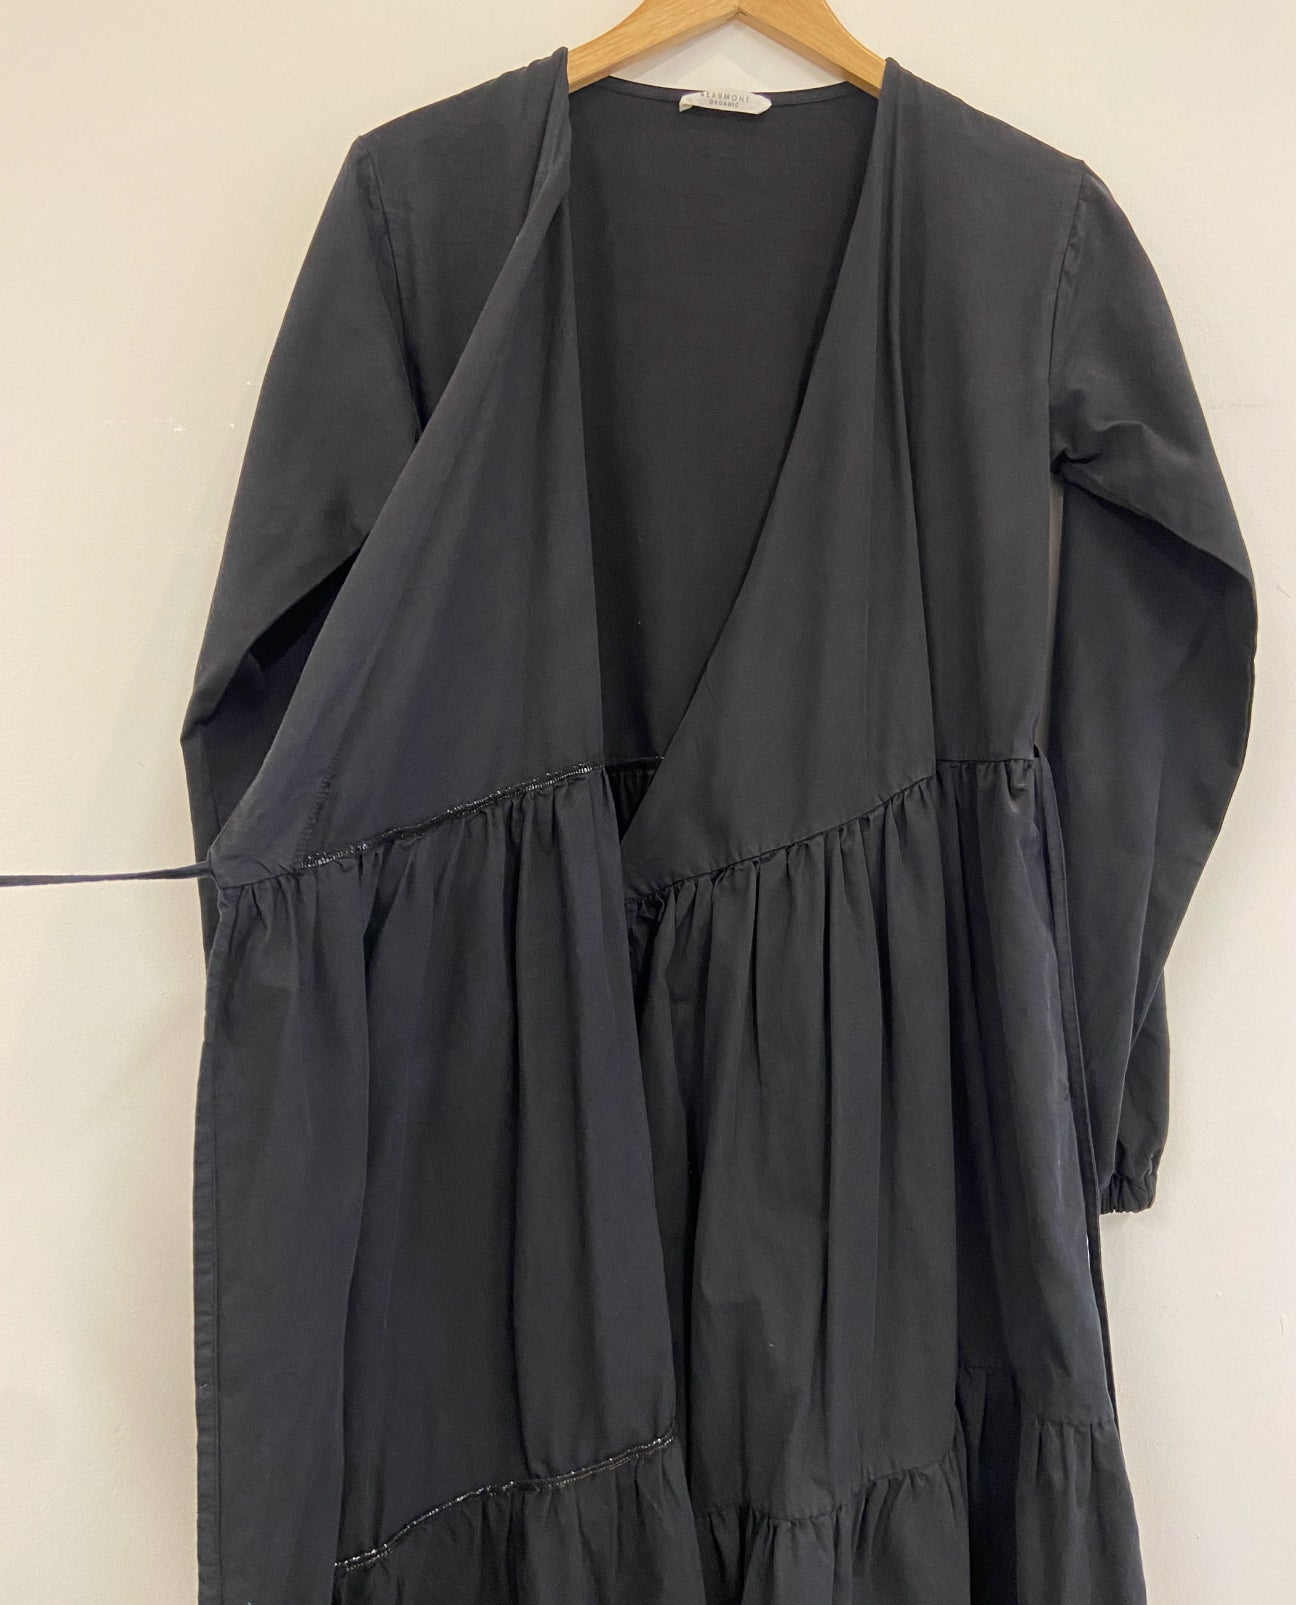 Gwen Organic Cotton and Tencel Dress in Black XS